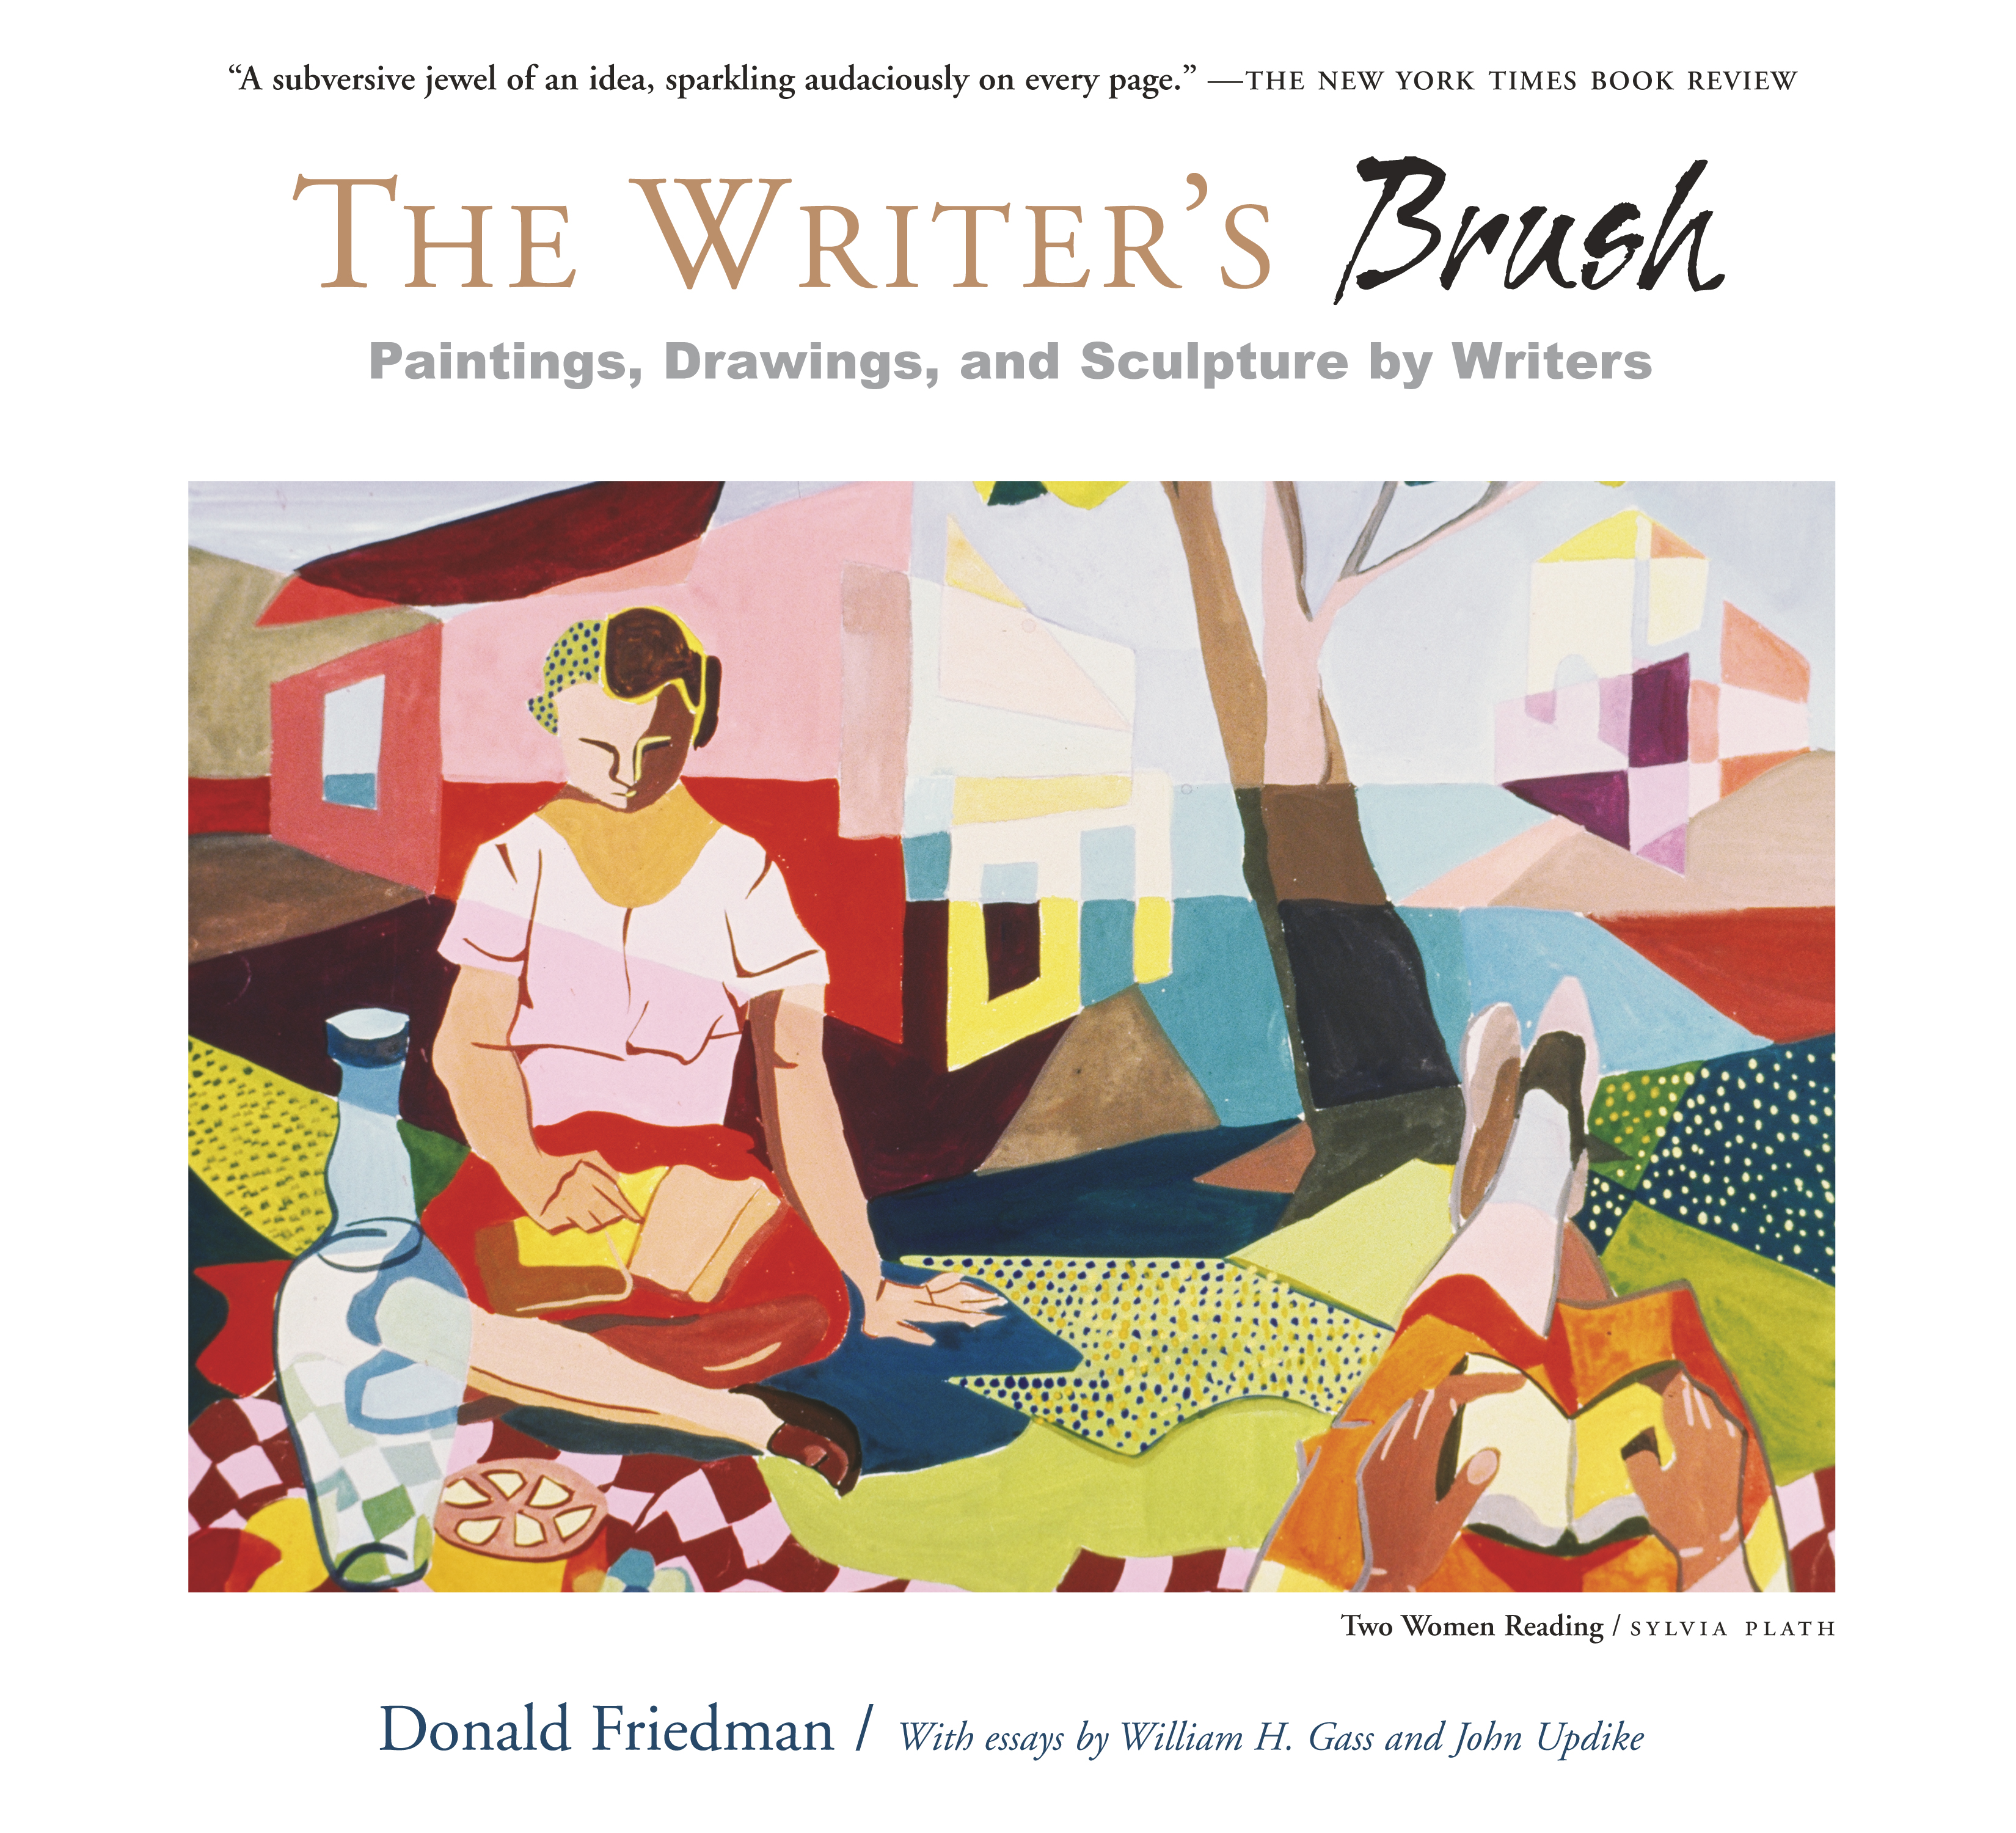 The Writer's Brush by Donald Friedman #art #artists #writers